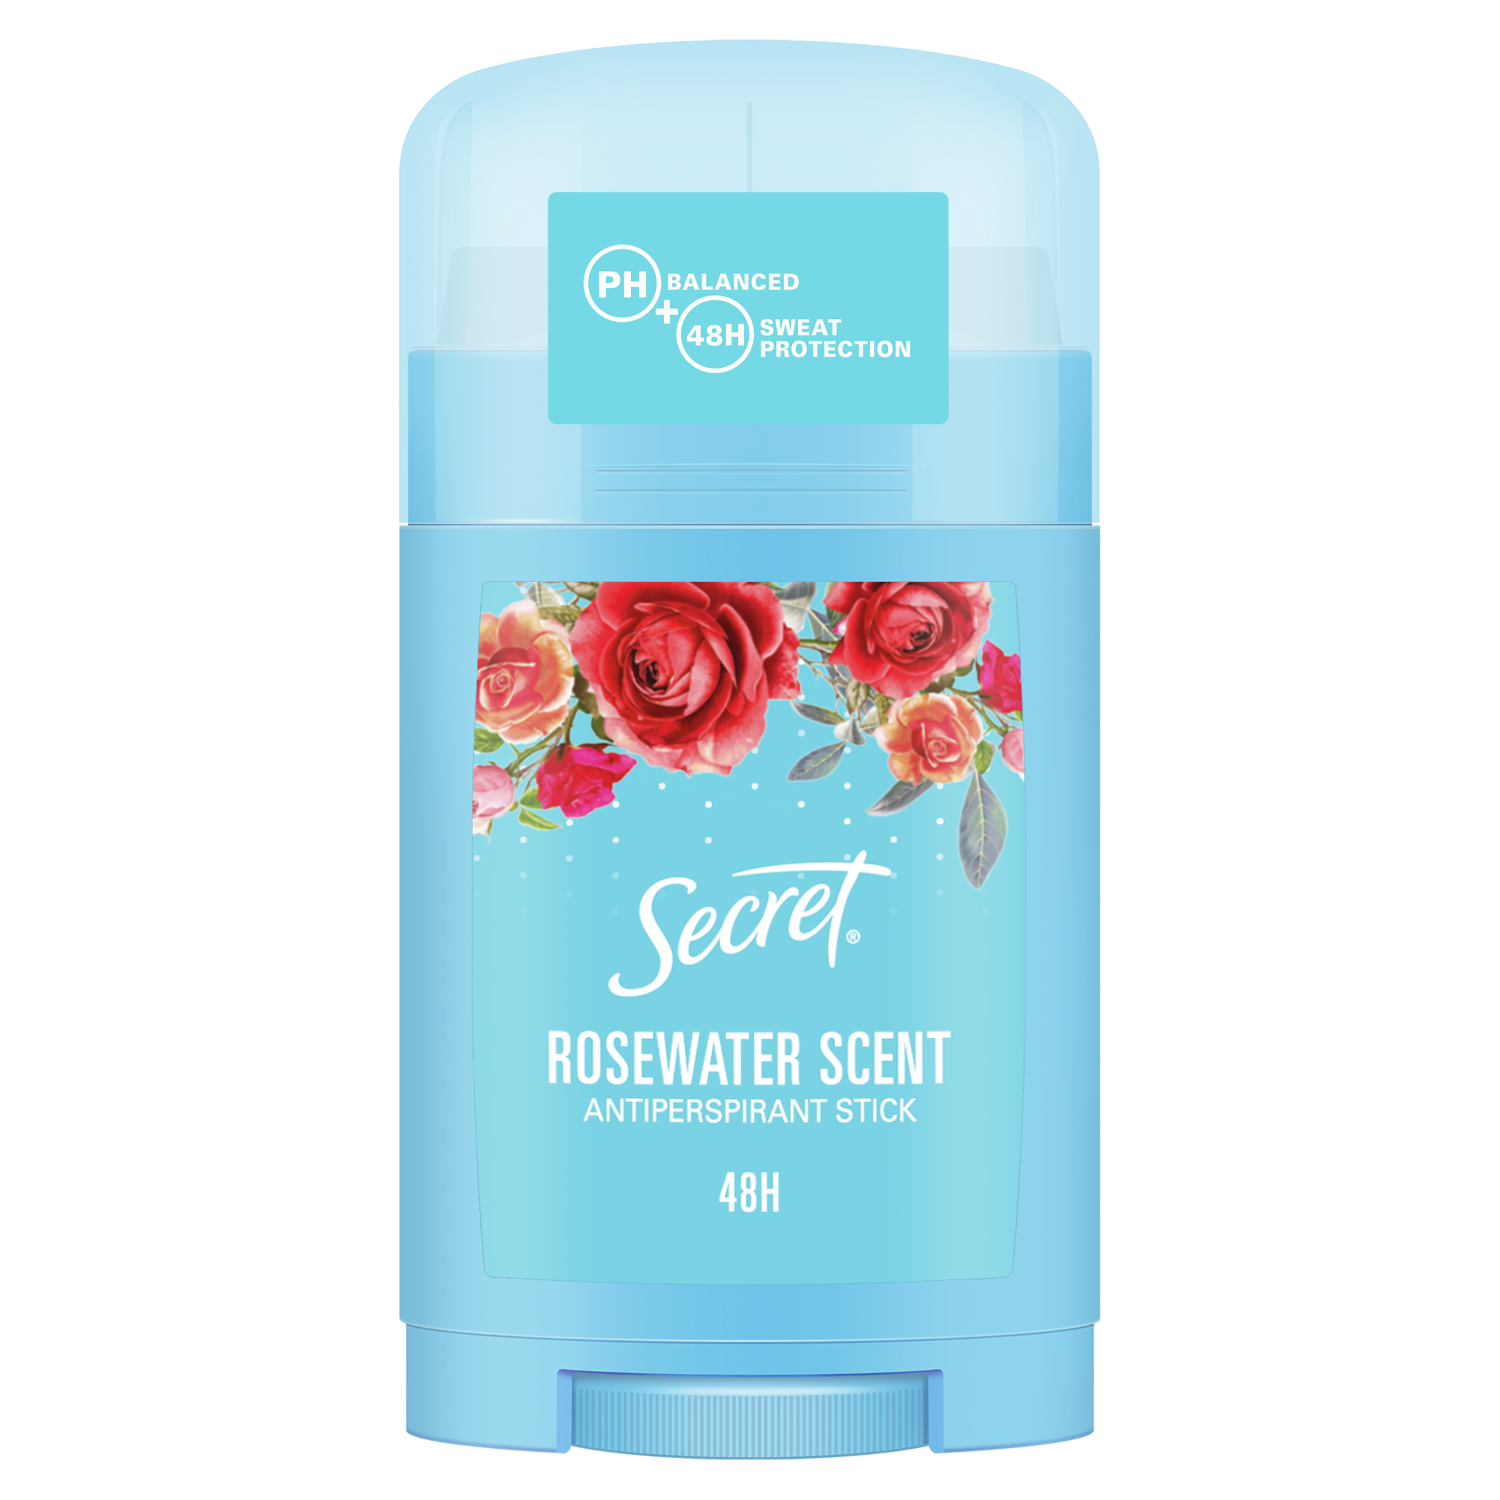 Secret Rosewater Scent стик-антиперспирант для женщин, 45 г антиперспирант стик secret rosewater scent 40 мл